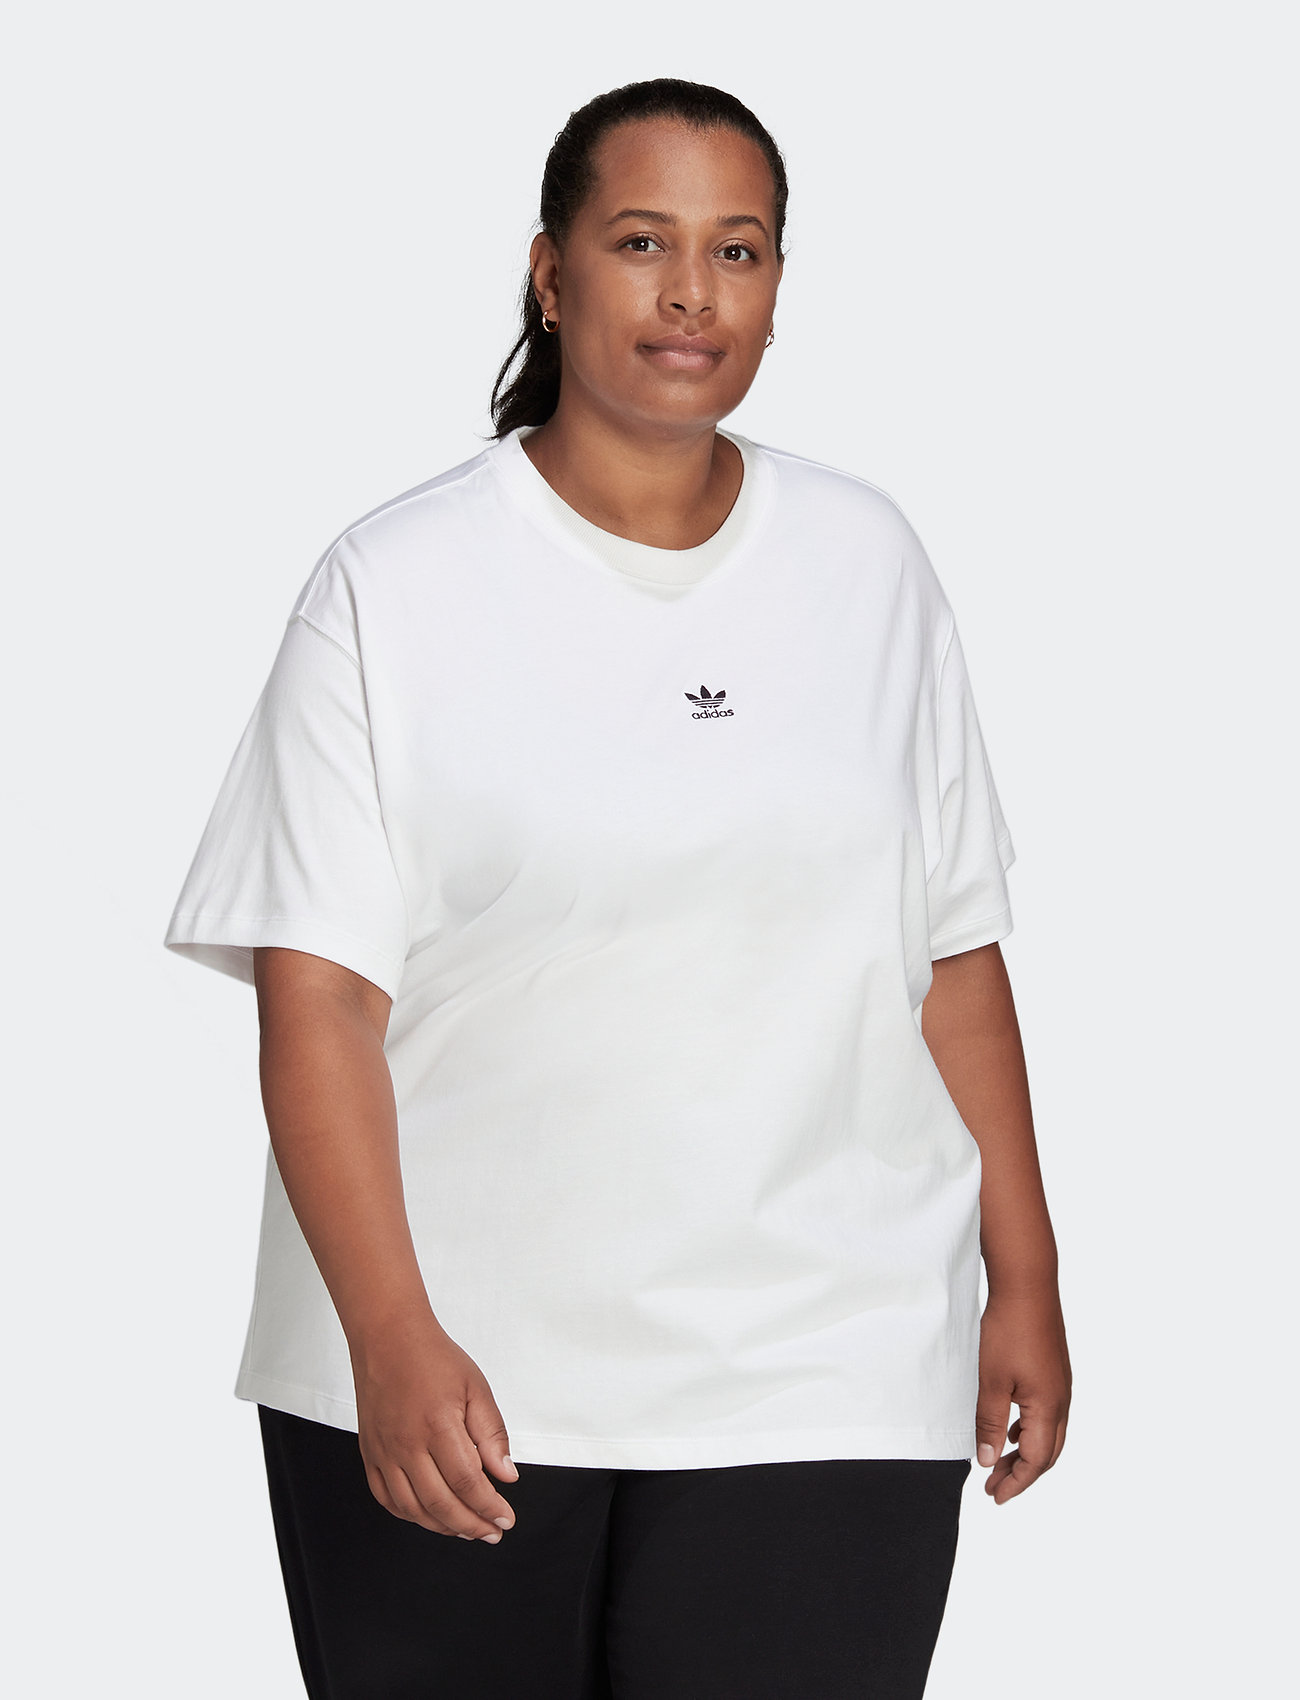 Marty Fielding Naar boven Pardon adidas Originals T-shirt (plus Size) - T-shirts - Boozt.com